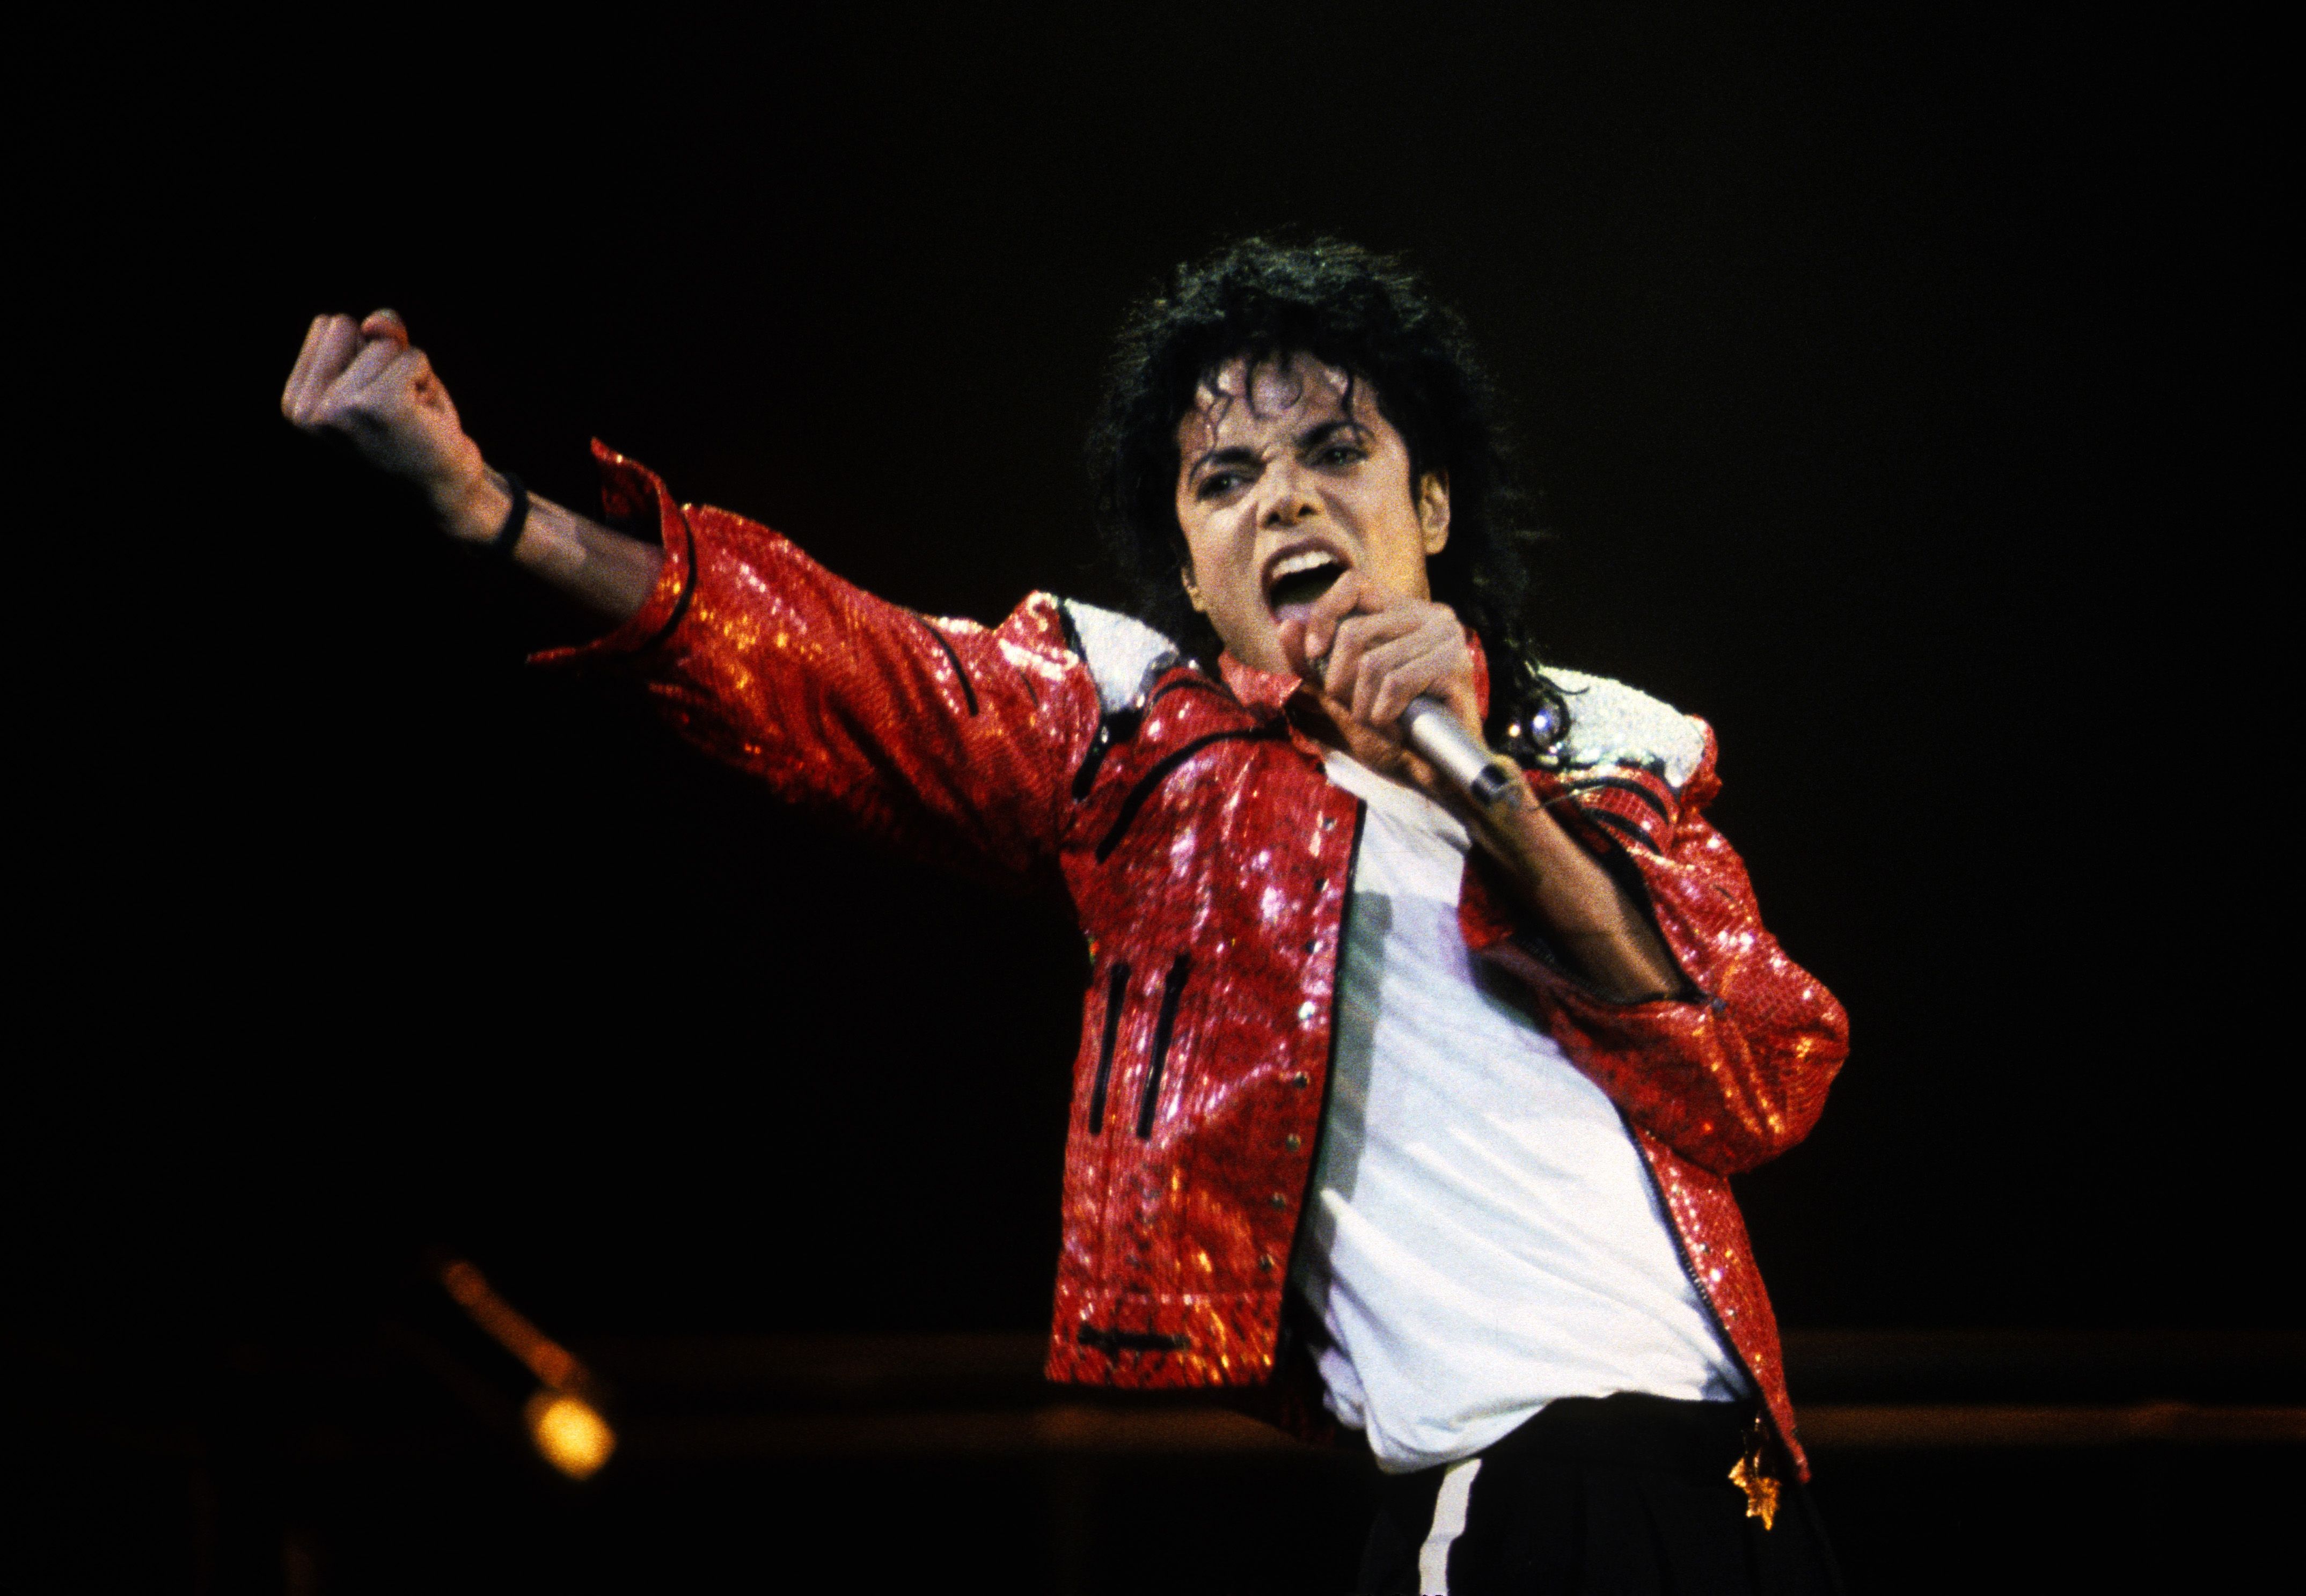 SIGNATURE DANCE MOVES OF MJ | Michael jackson, Life drawing pose, Jackson